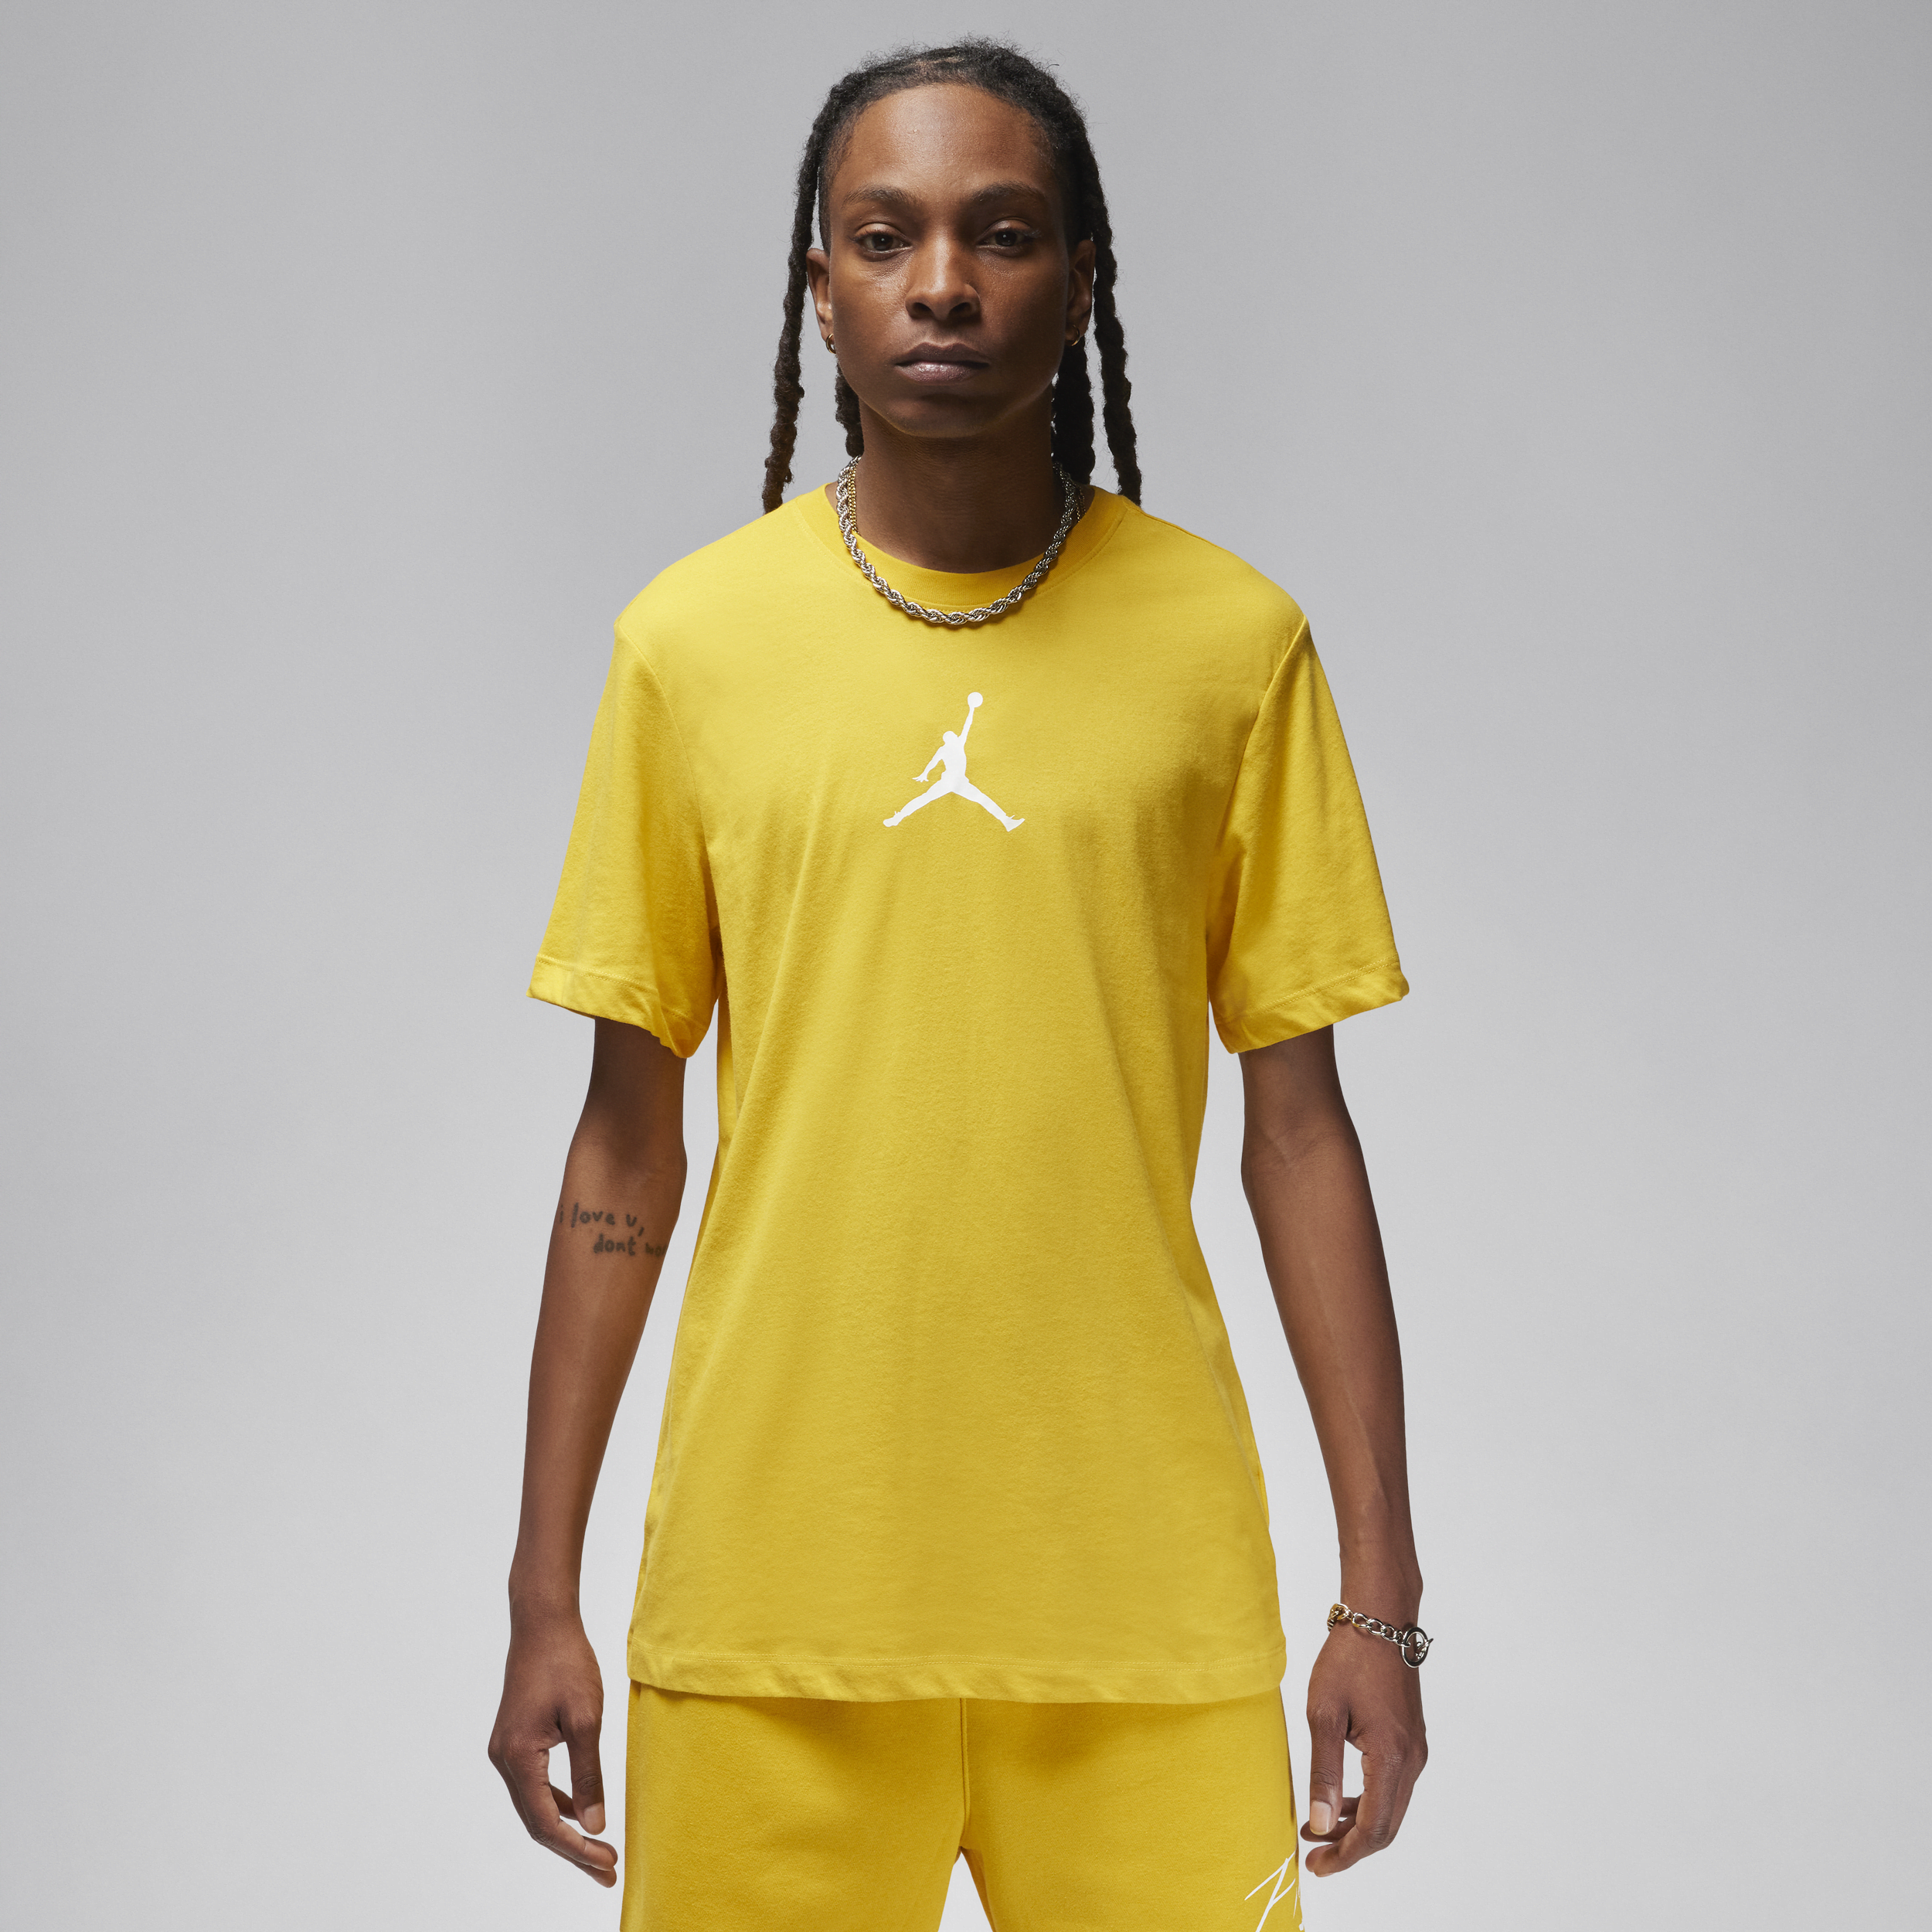 Jordan Jumpman Camiseta - Hombre - Amarillo